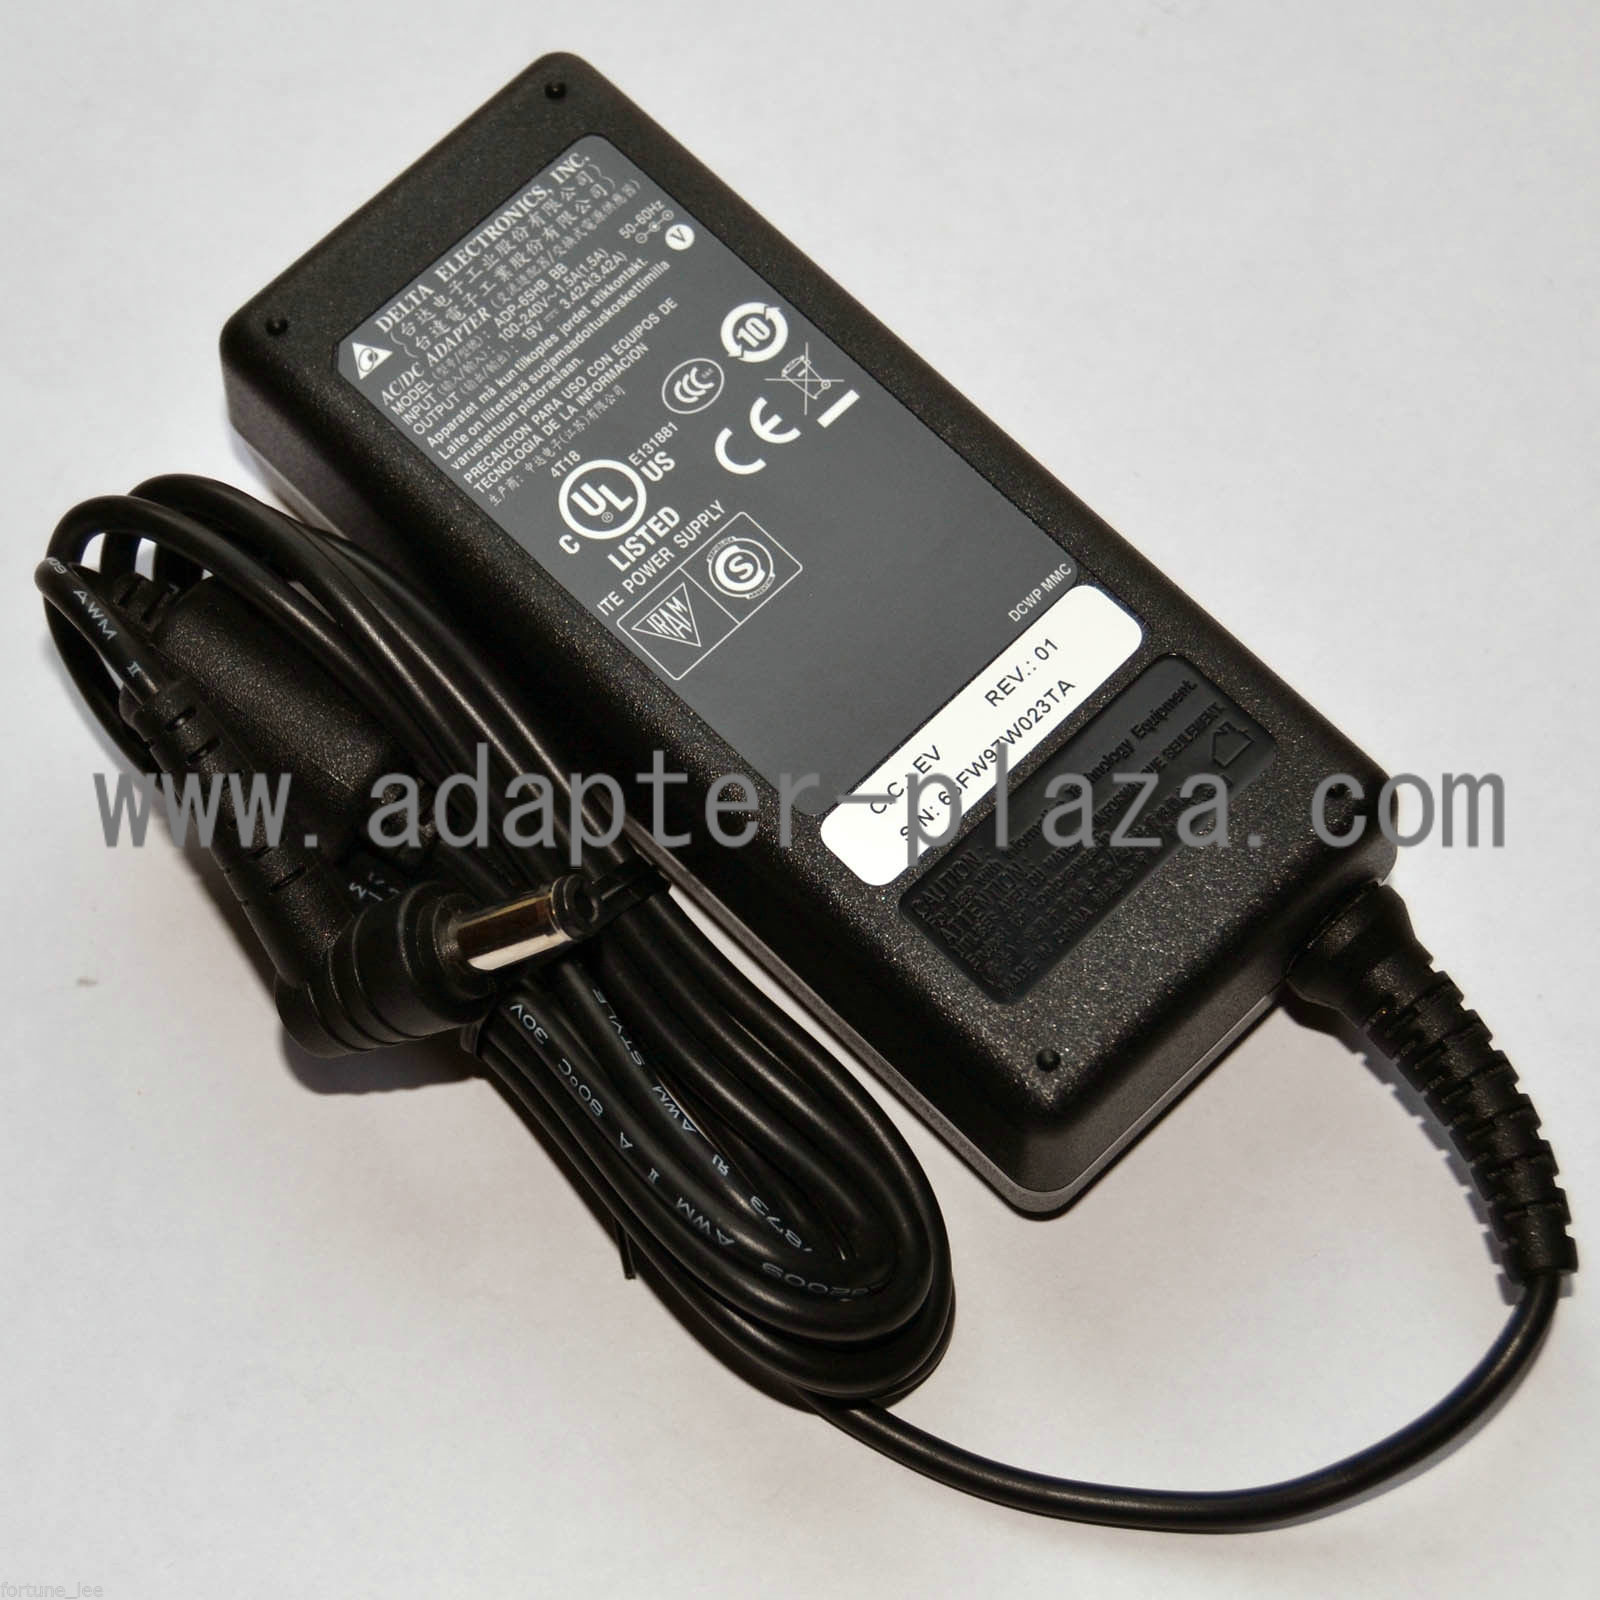 New Original 19V 3.42A DELTA 5.5*2.5mm Power AC Charger Adapter for MSI U135 U210 U230 L1300 Notebook PC